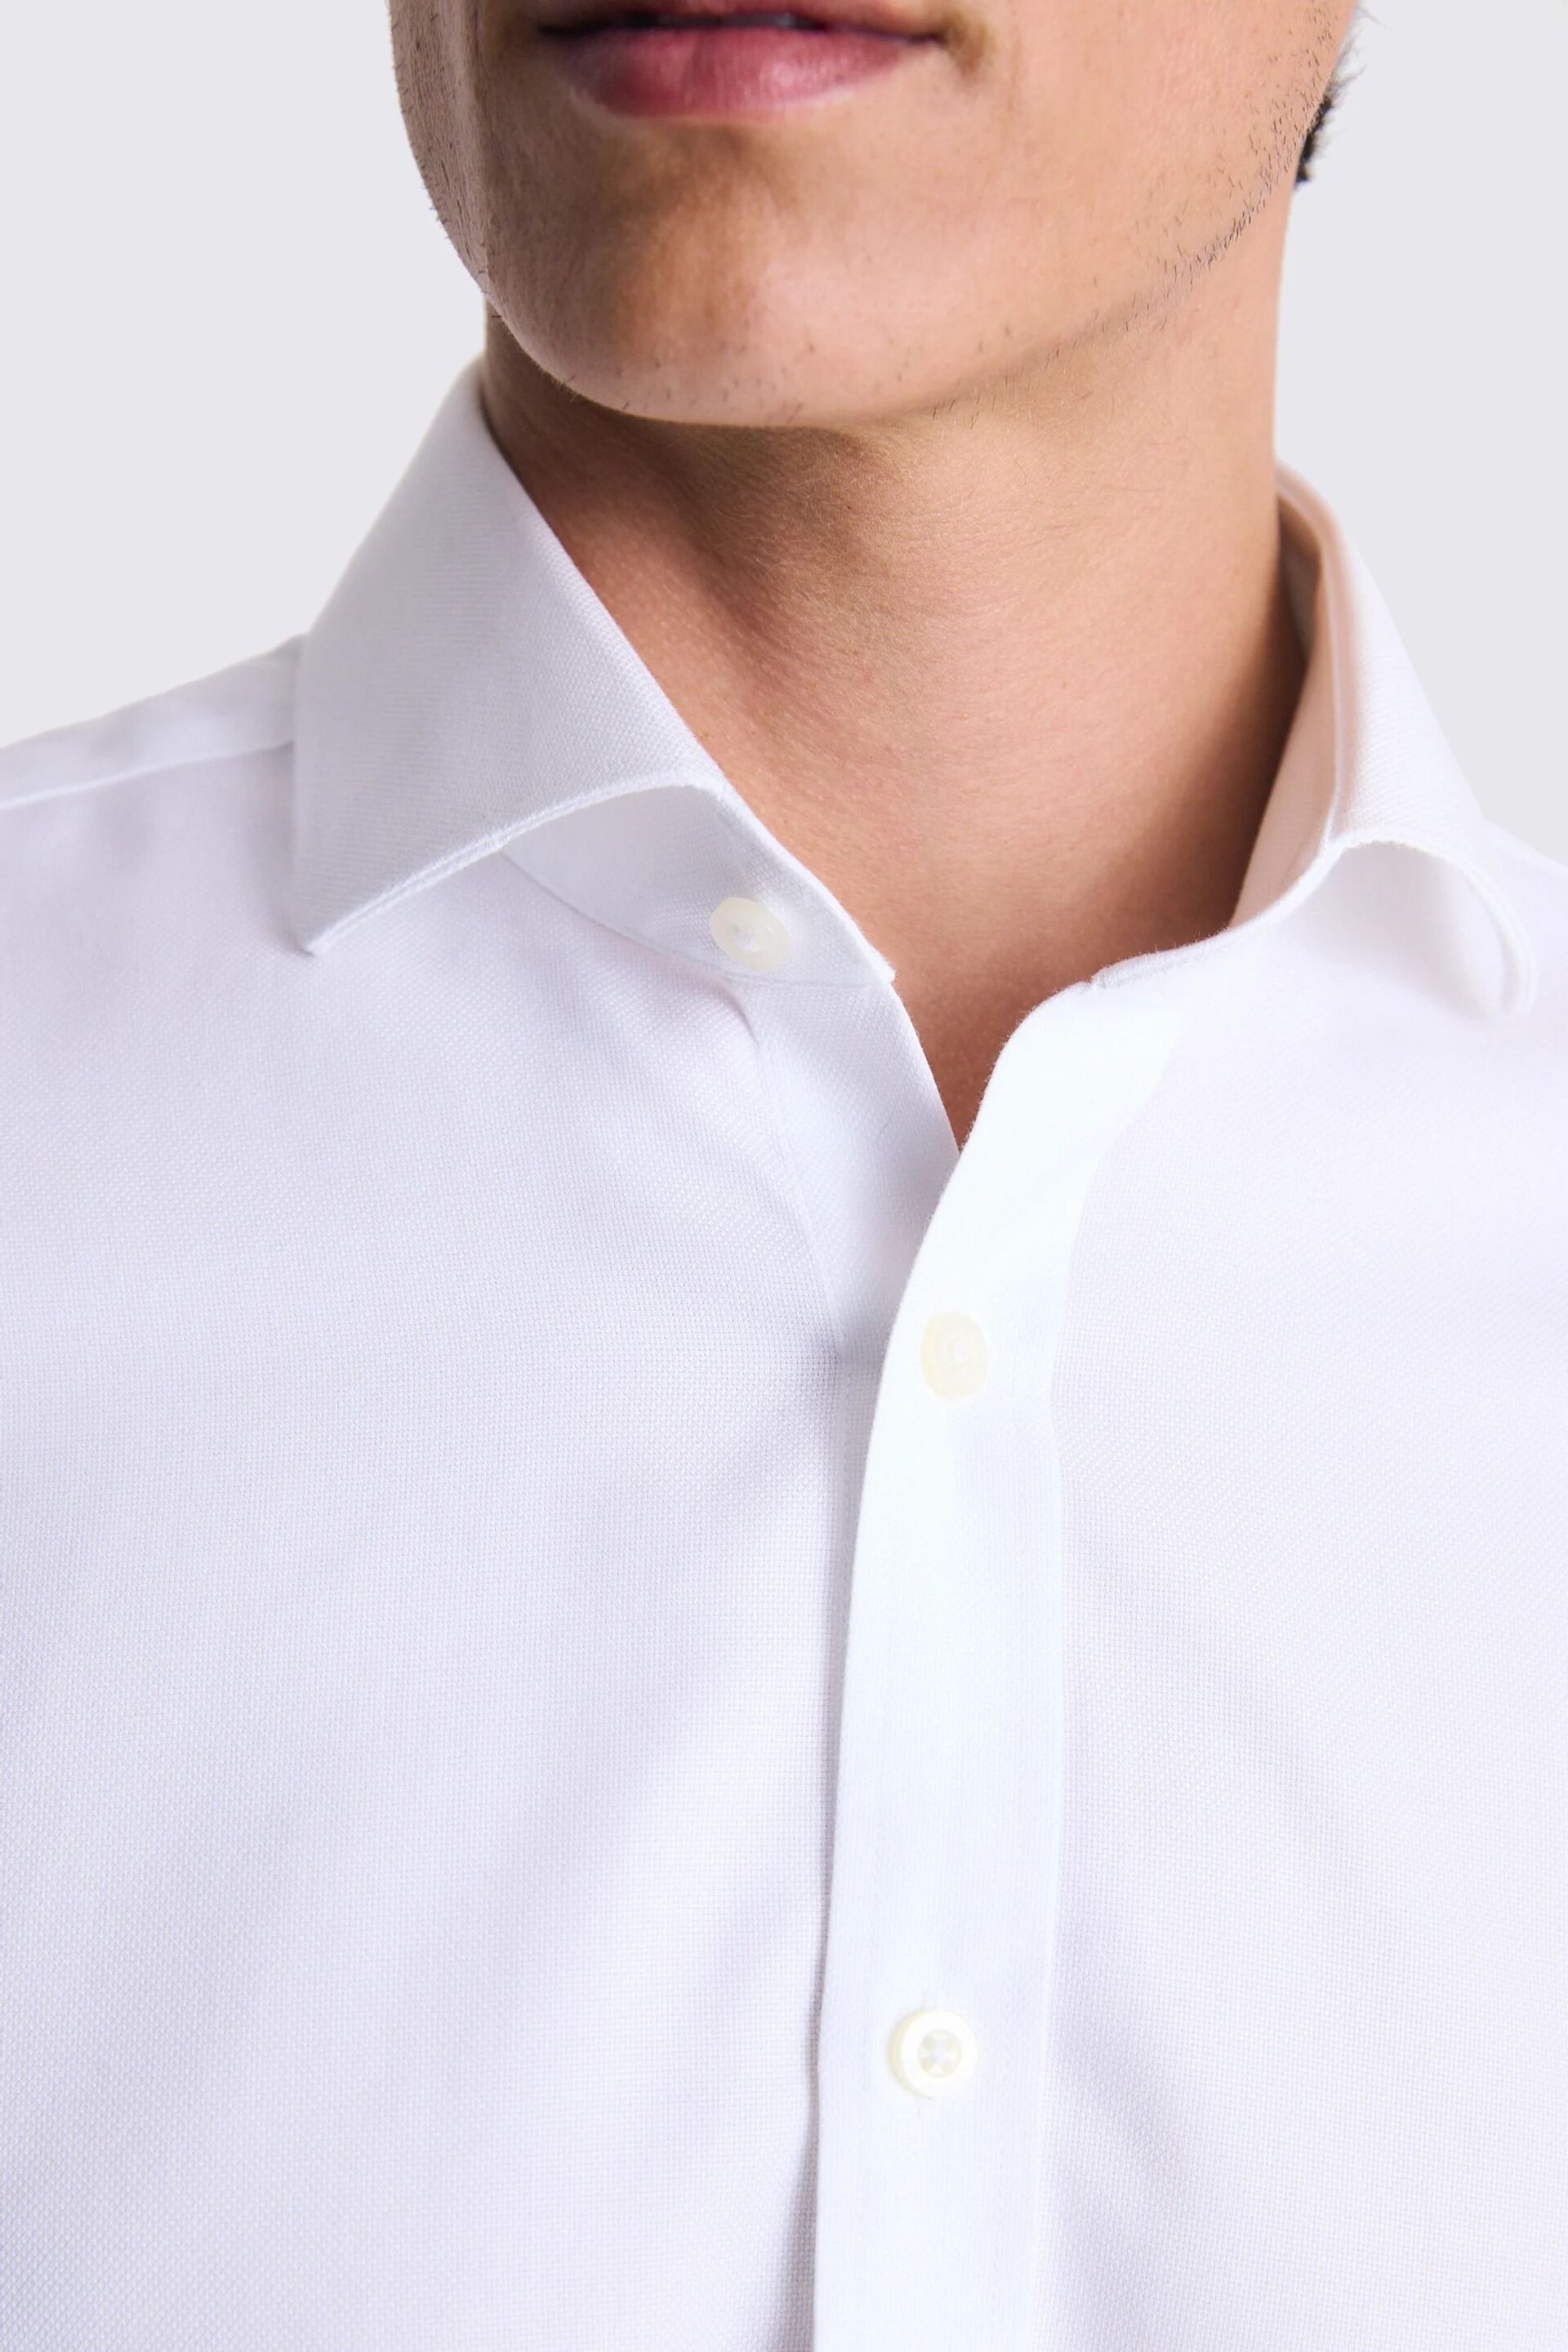 MOSS White Tailored Fit Textured Zero Iron Shirt - Image 2 of 4